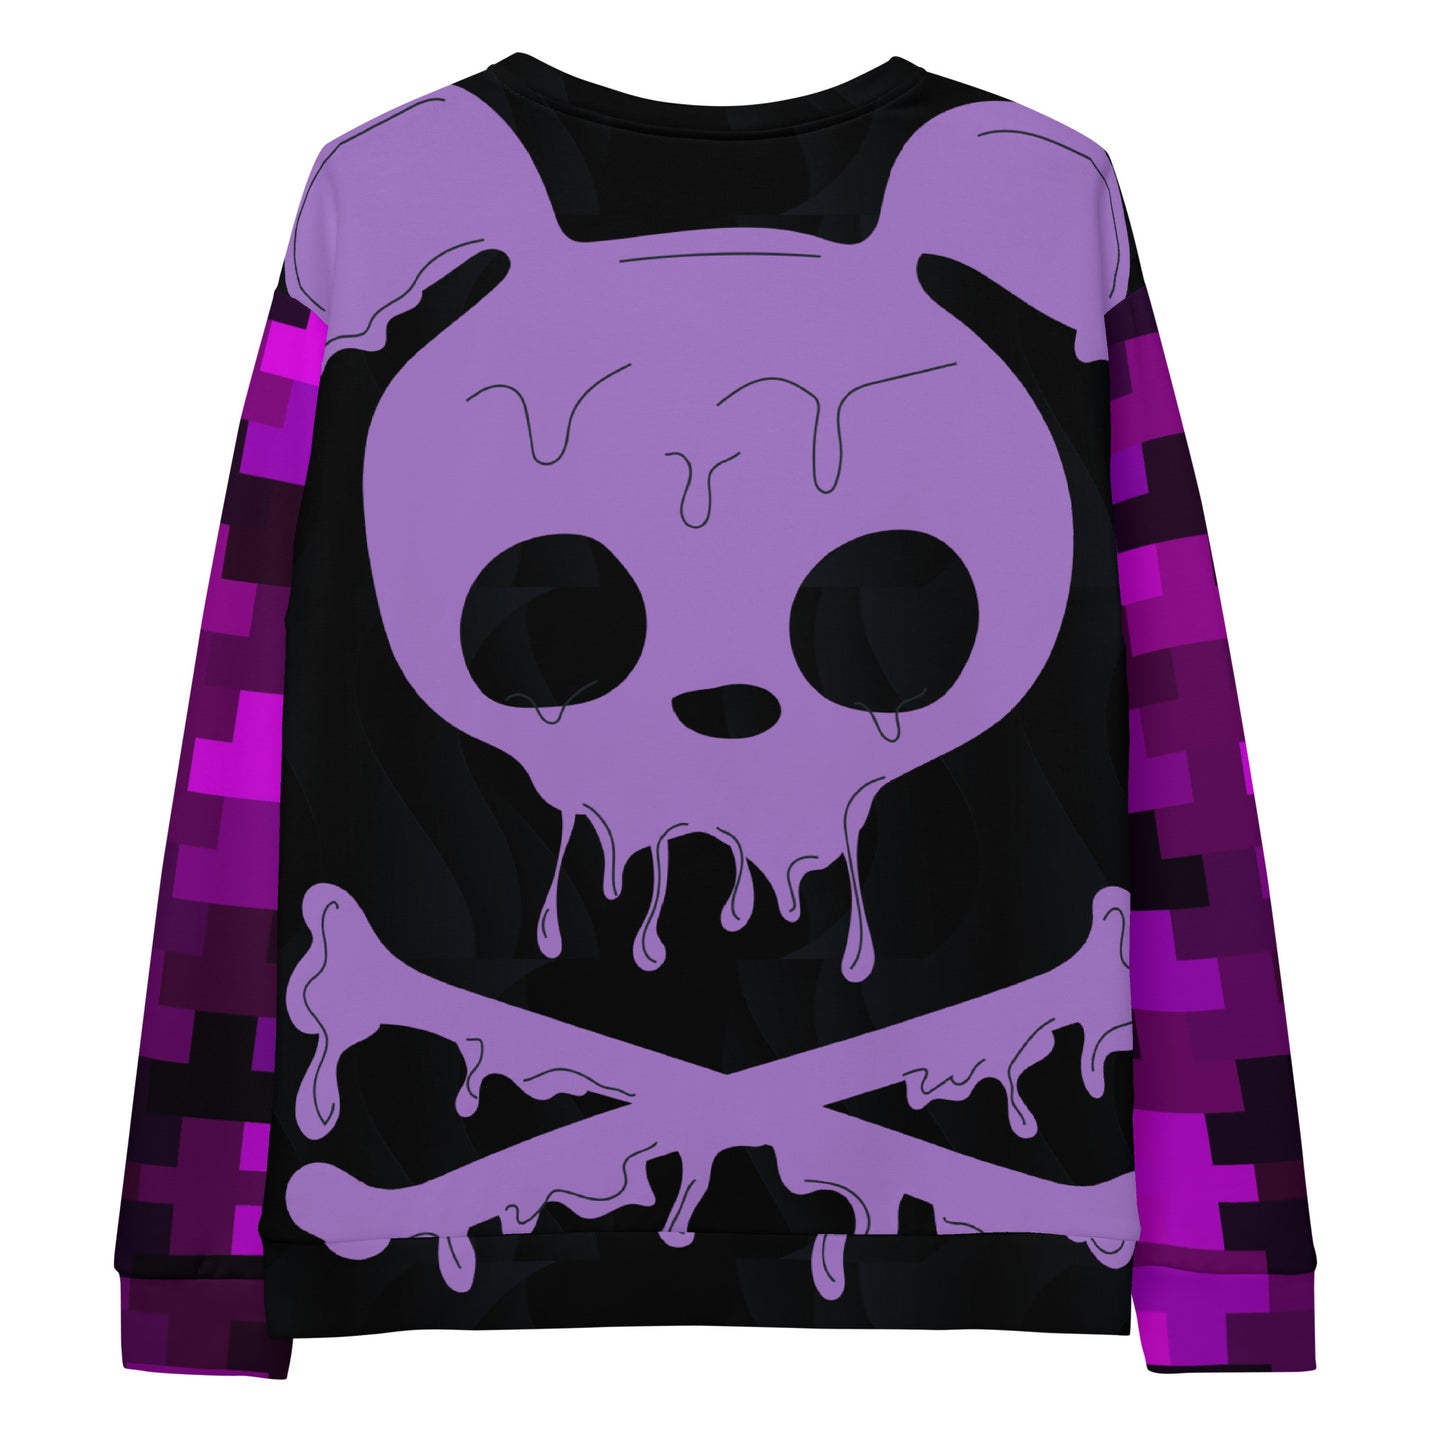 Tipsy Rebel Purple Poison Unisex Sweatshirt